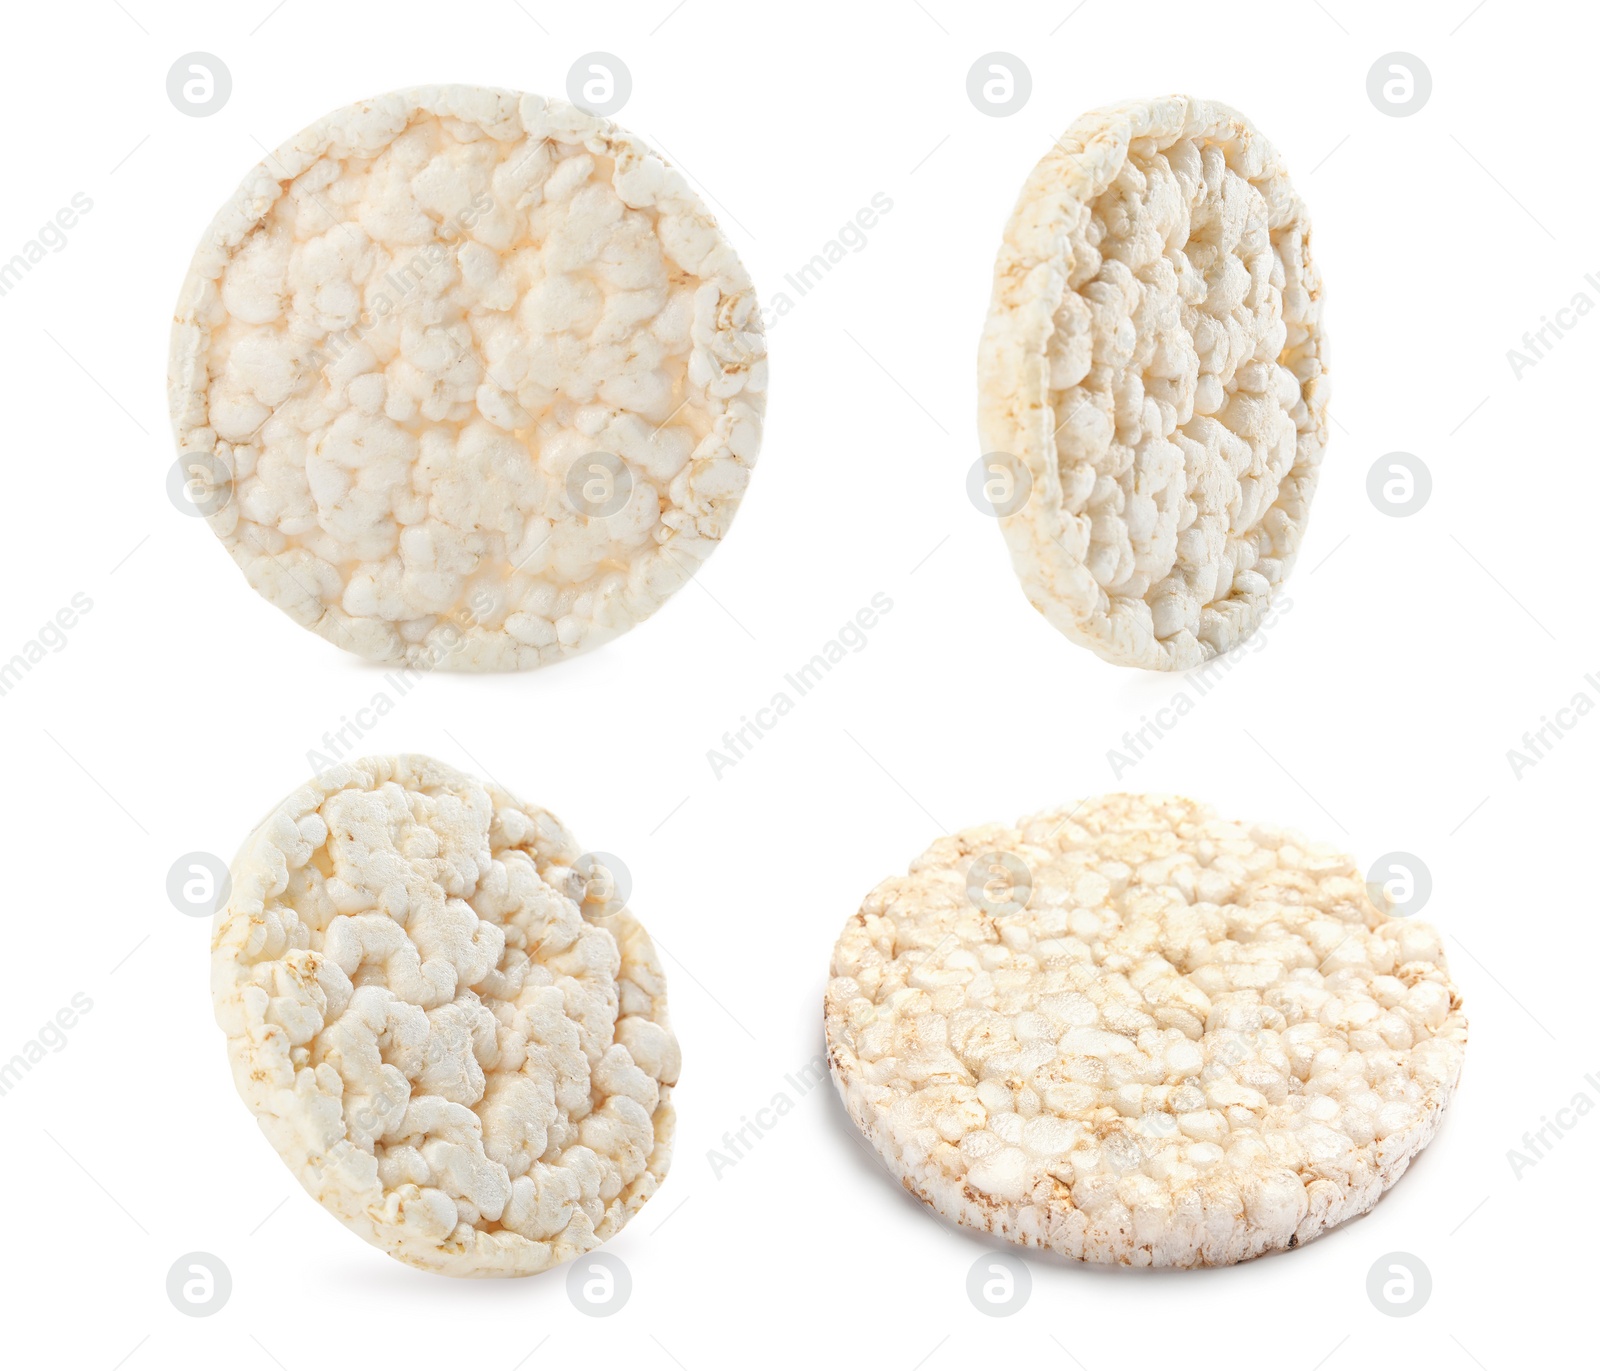 Image of Set of puffed corn cakes on white background